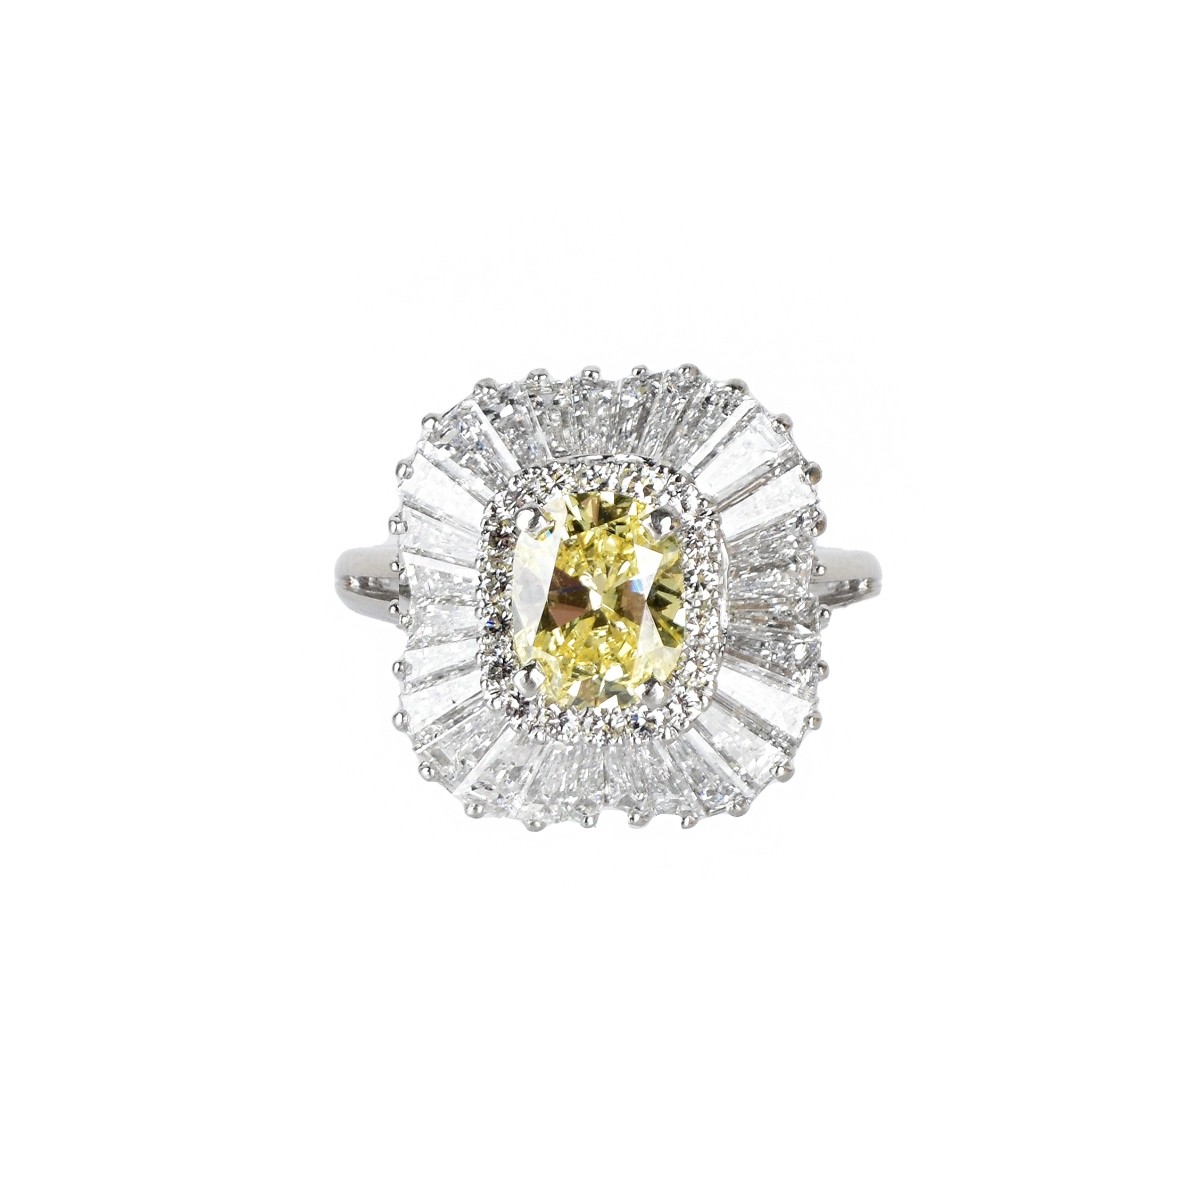 Fancy Yellow Diamond and Platinum Ring